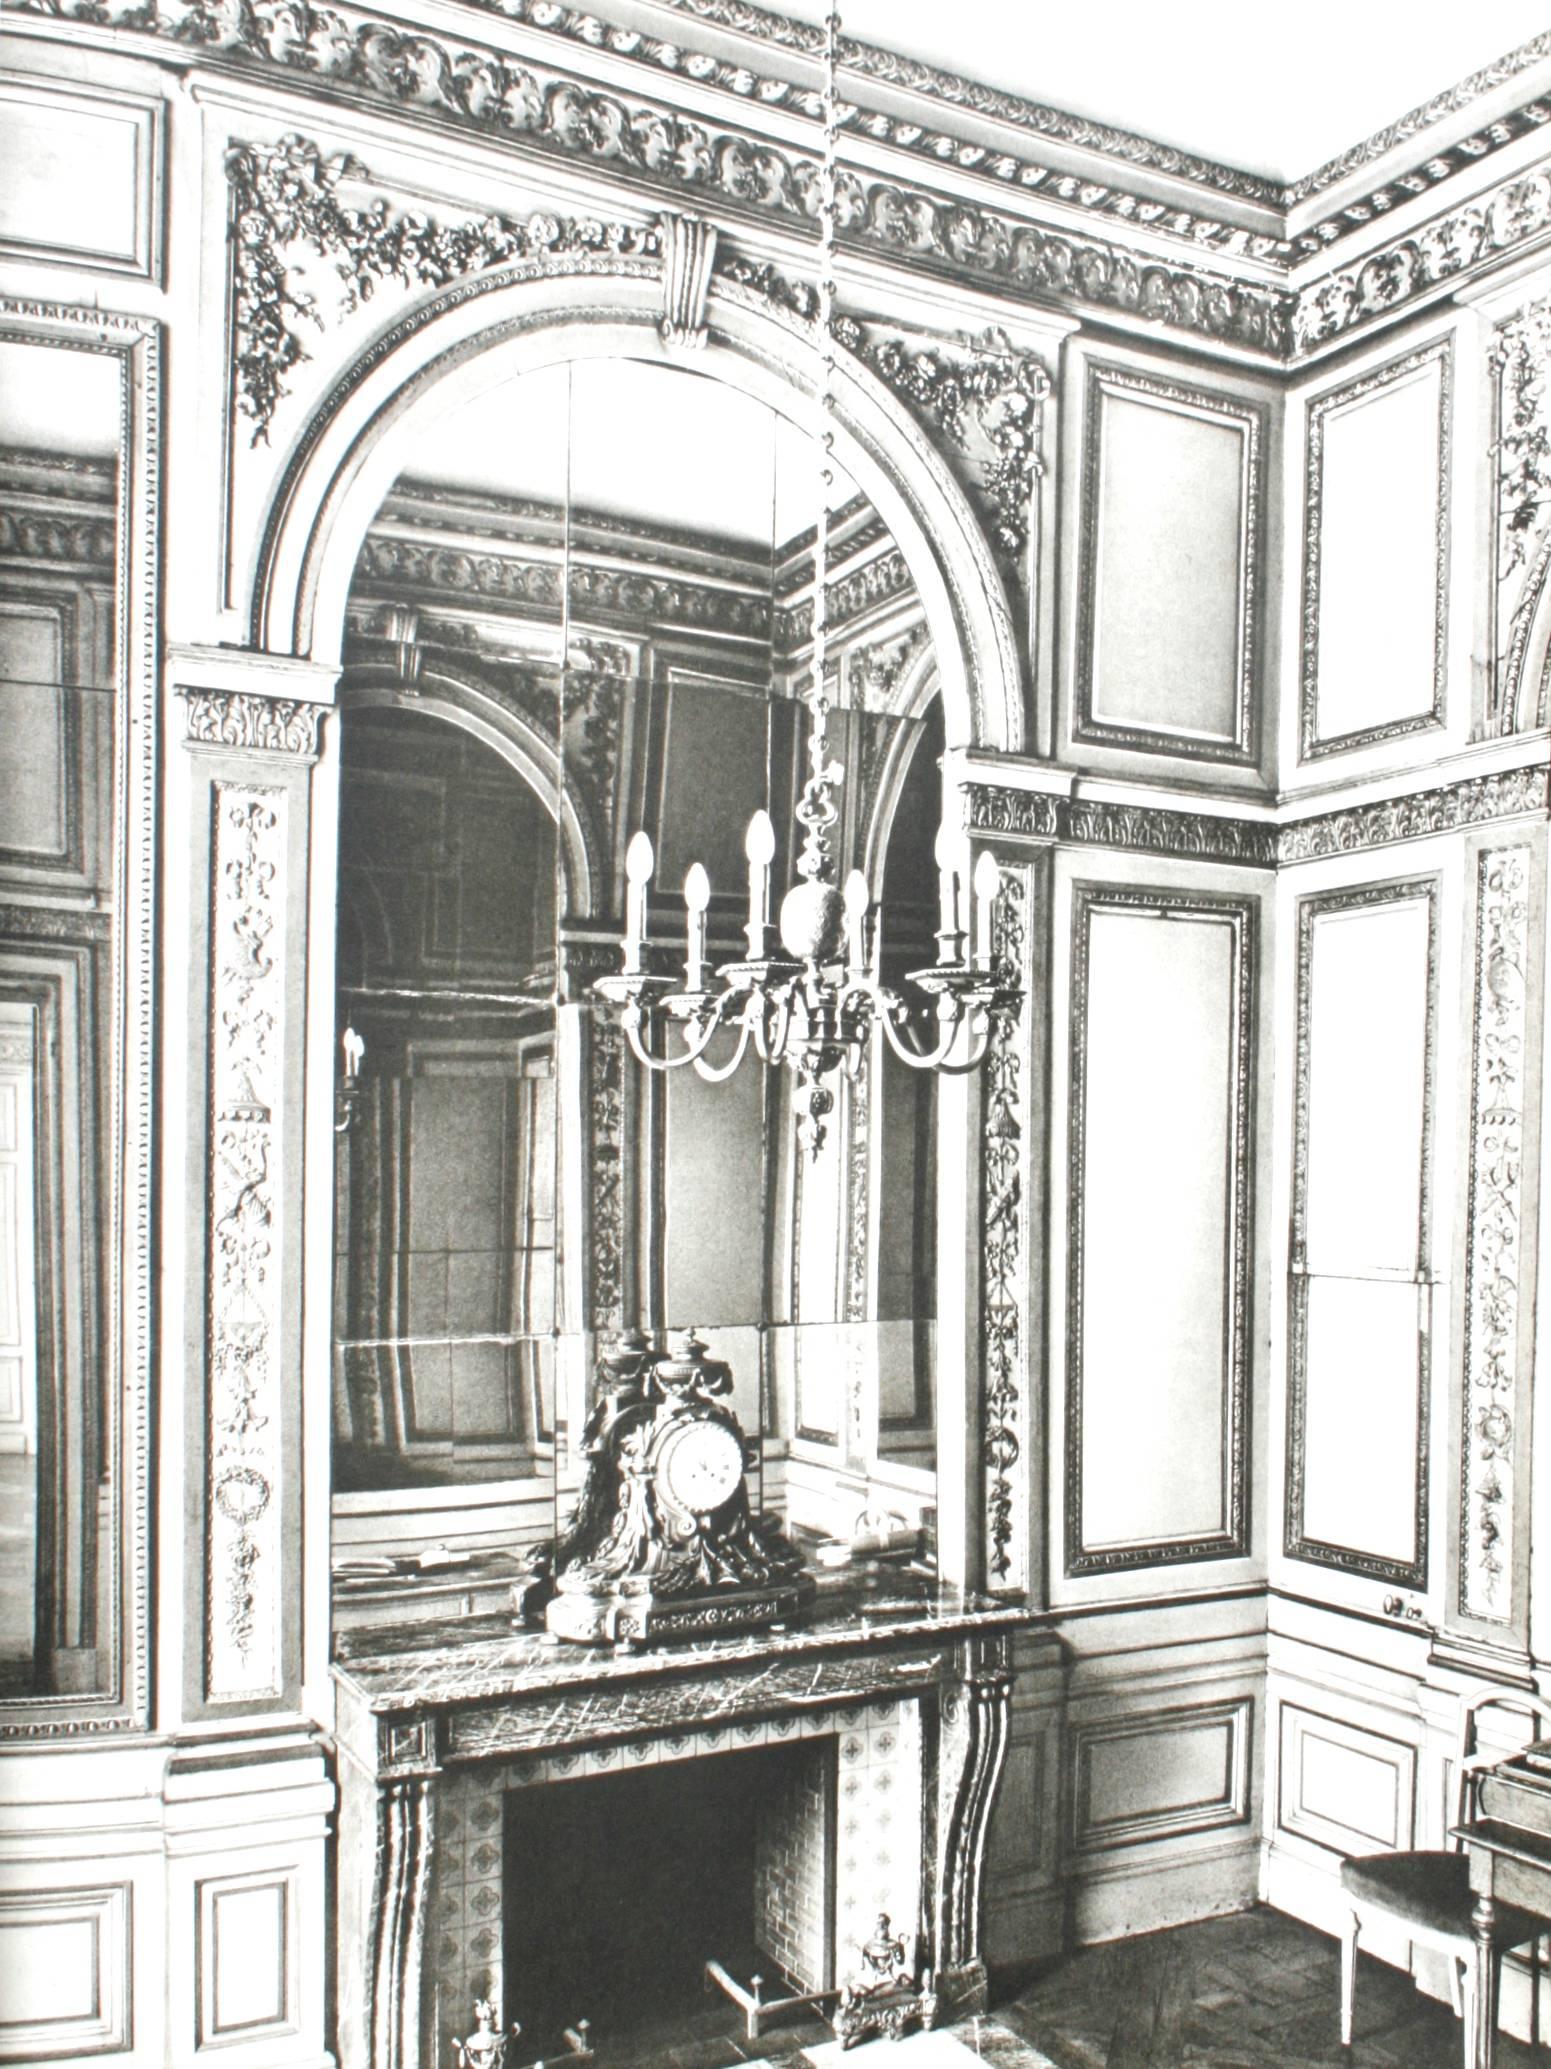 18th century french decor